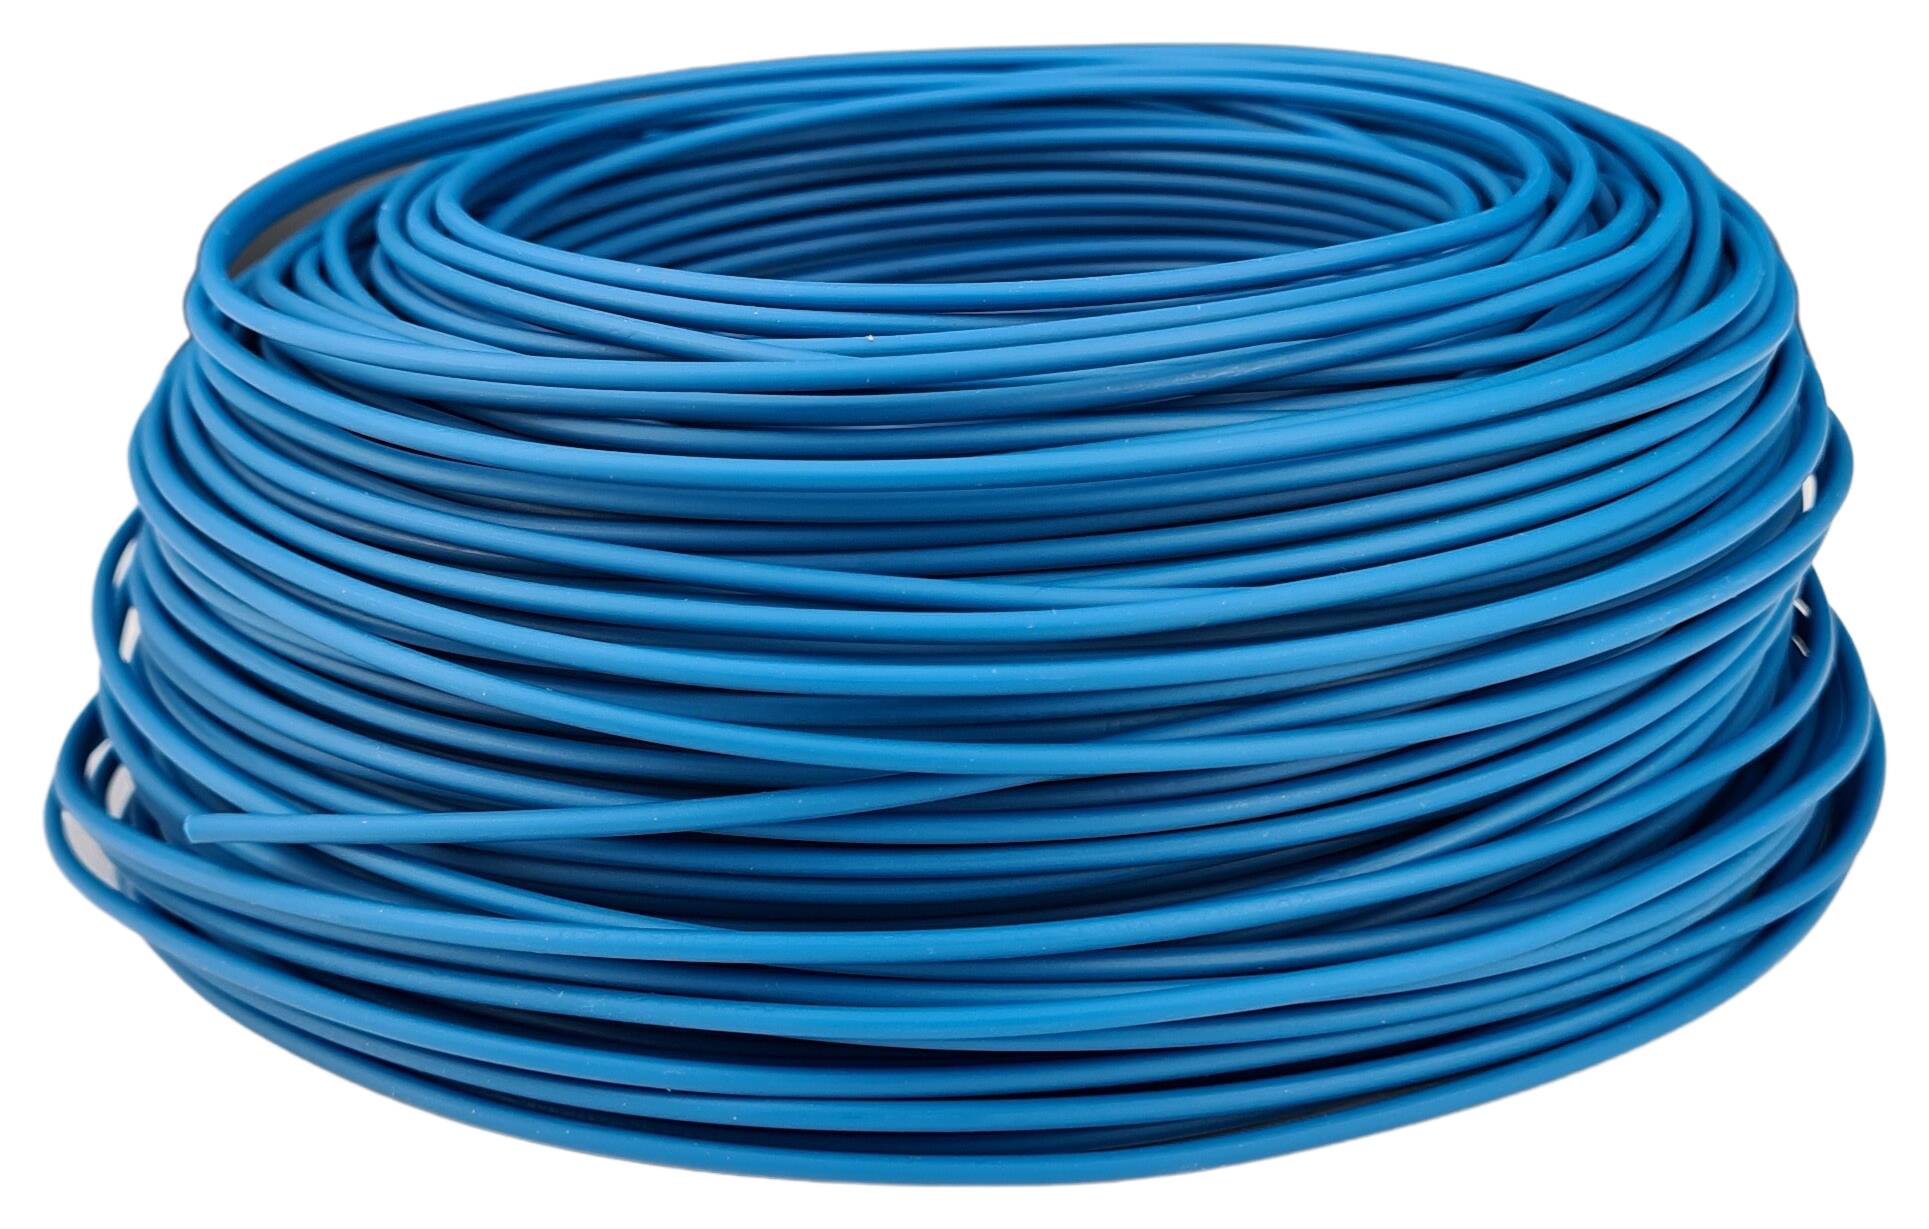 Kabel 1x1,0 H05V2-U starr blau